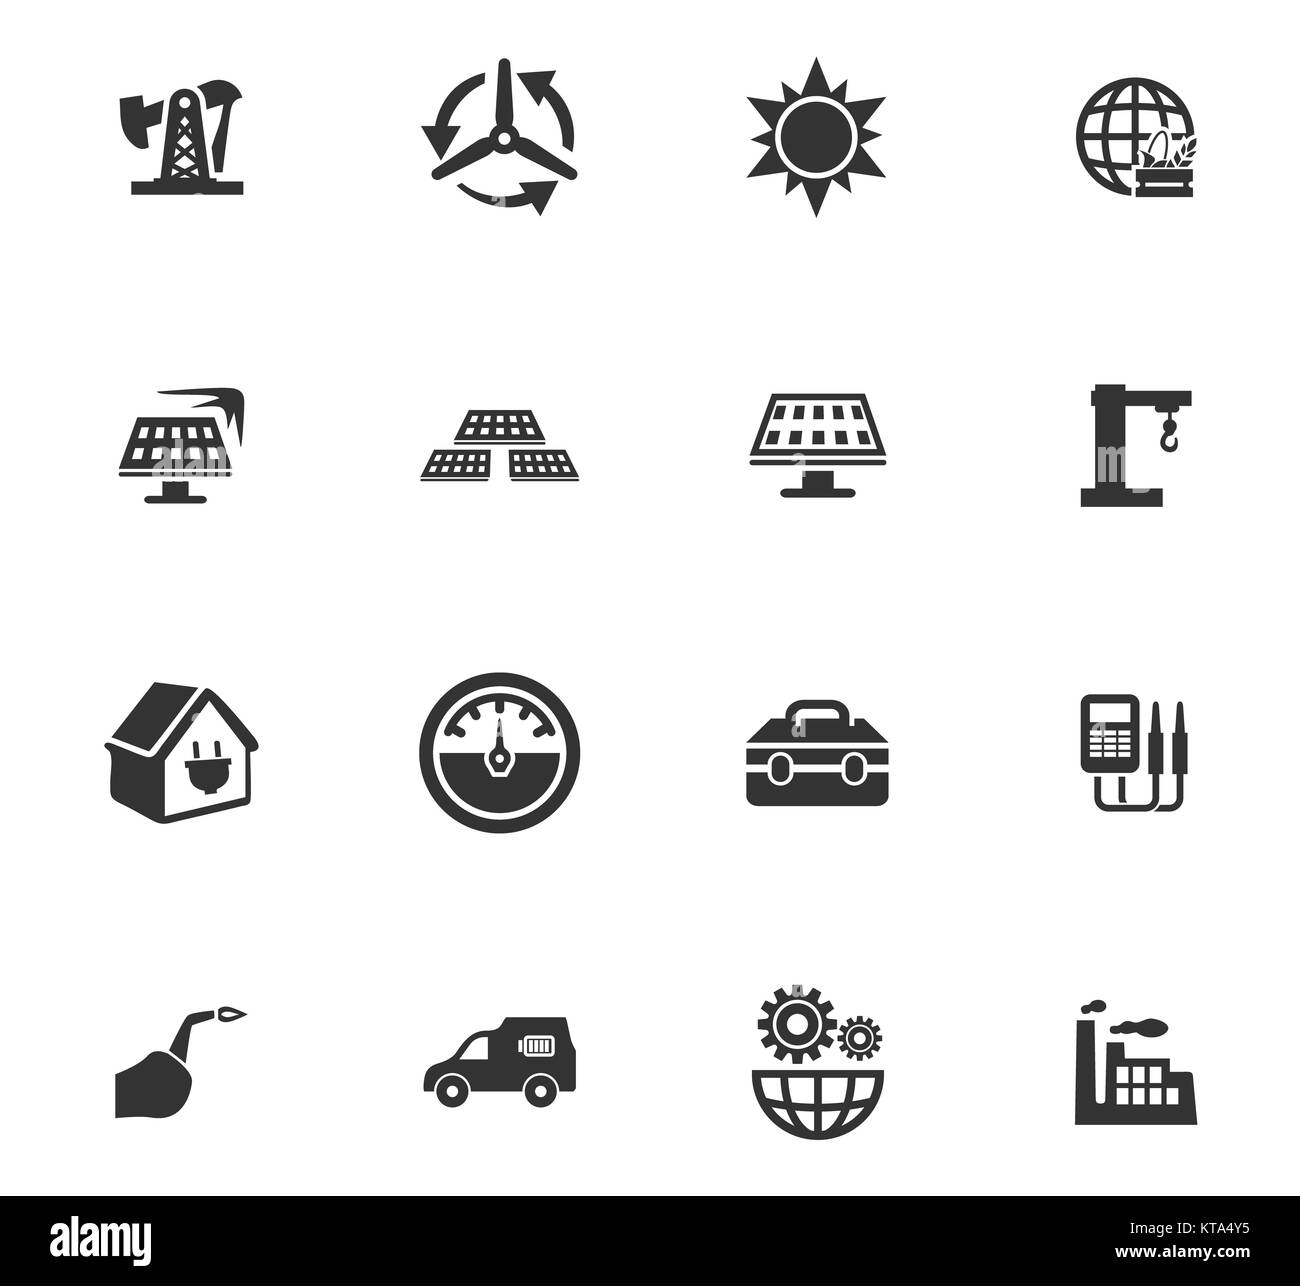 Alternative energy icons set Stock Photo